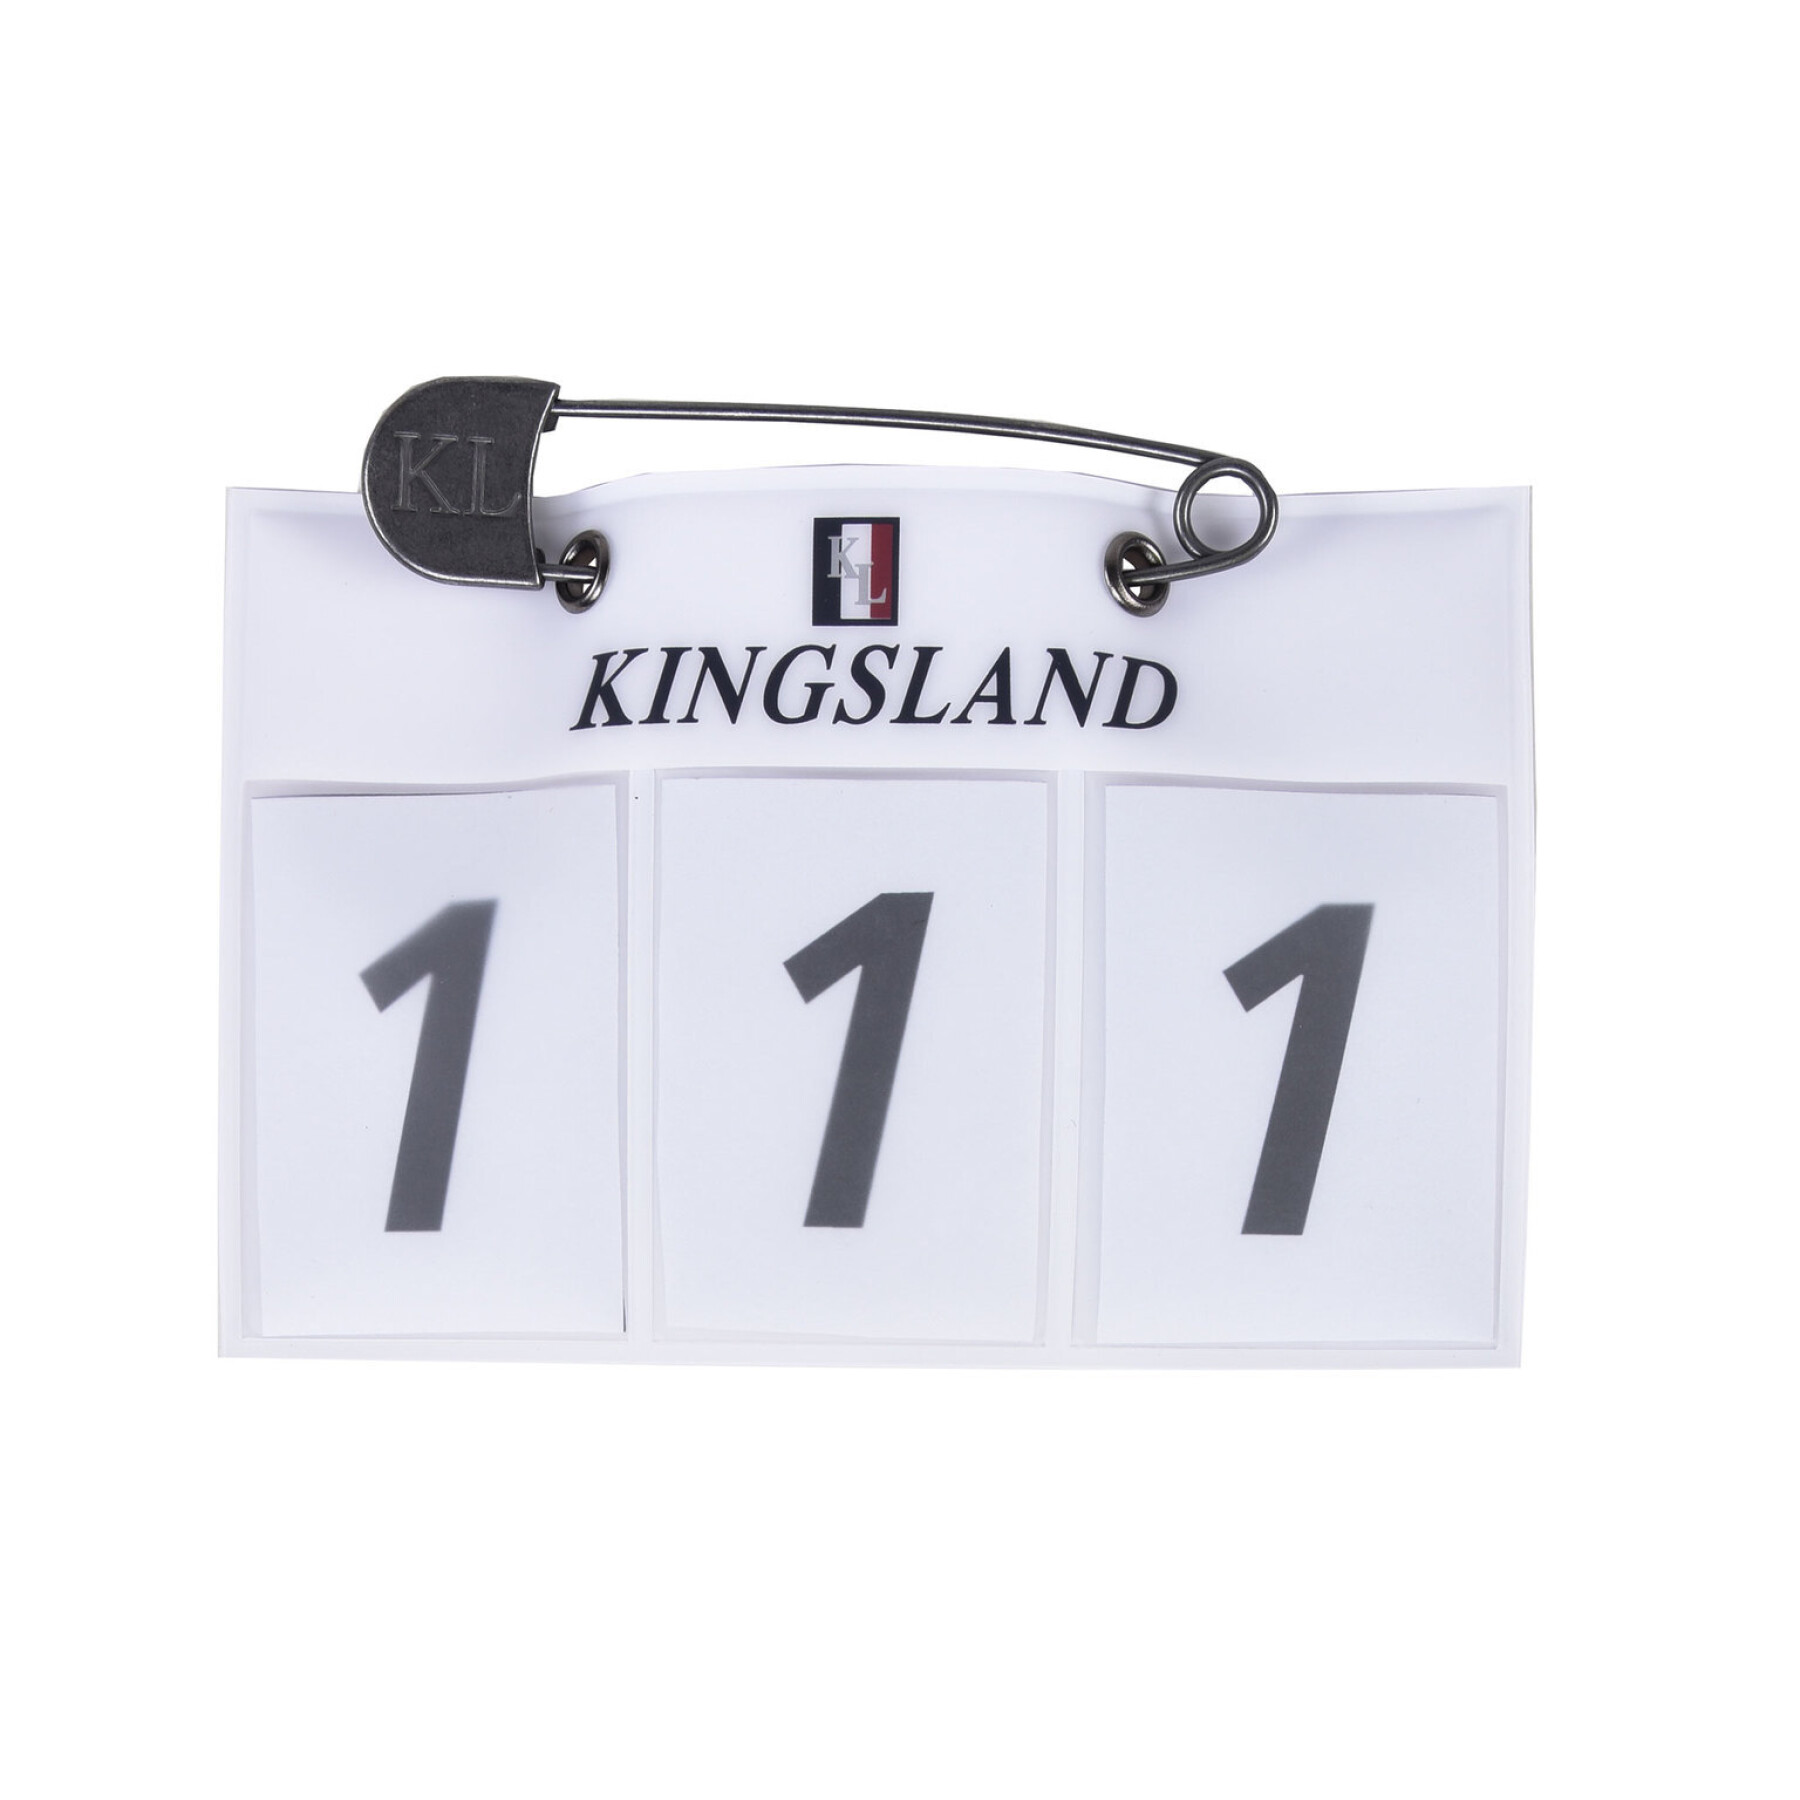 Schild für Nummer Kingsland Classic